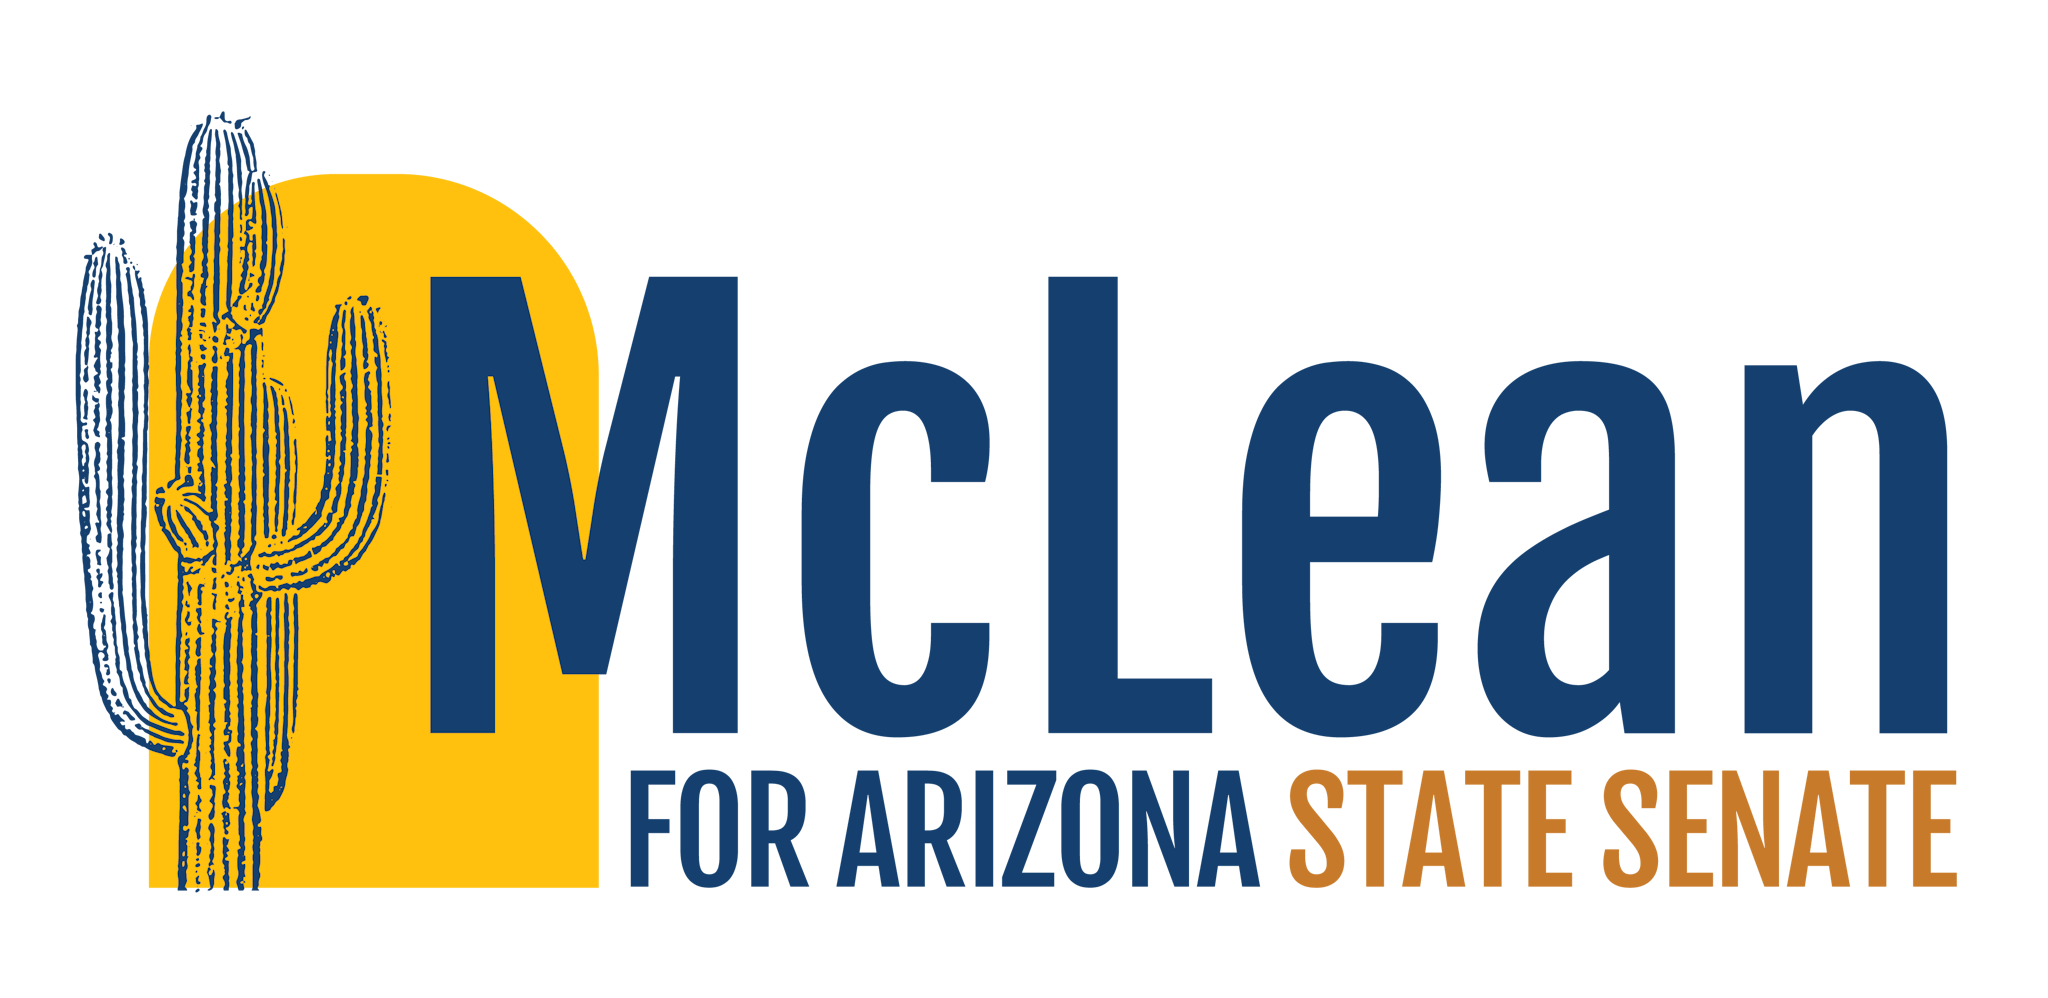 John McLean for State Senate logo